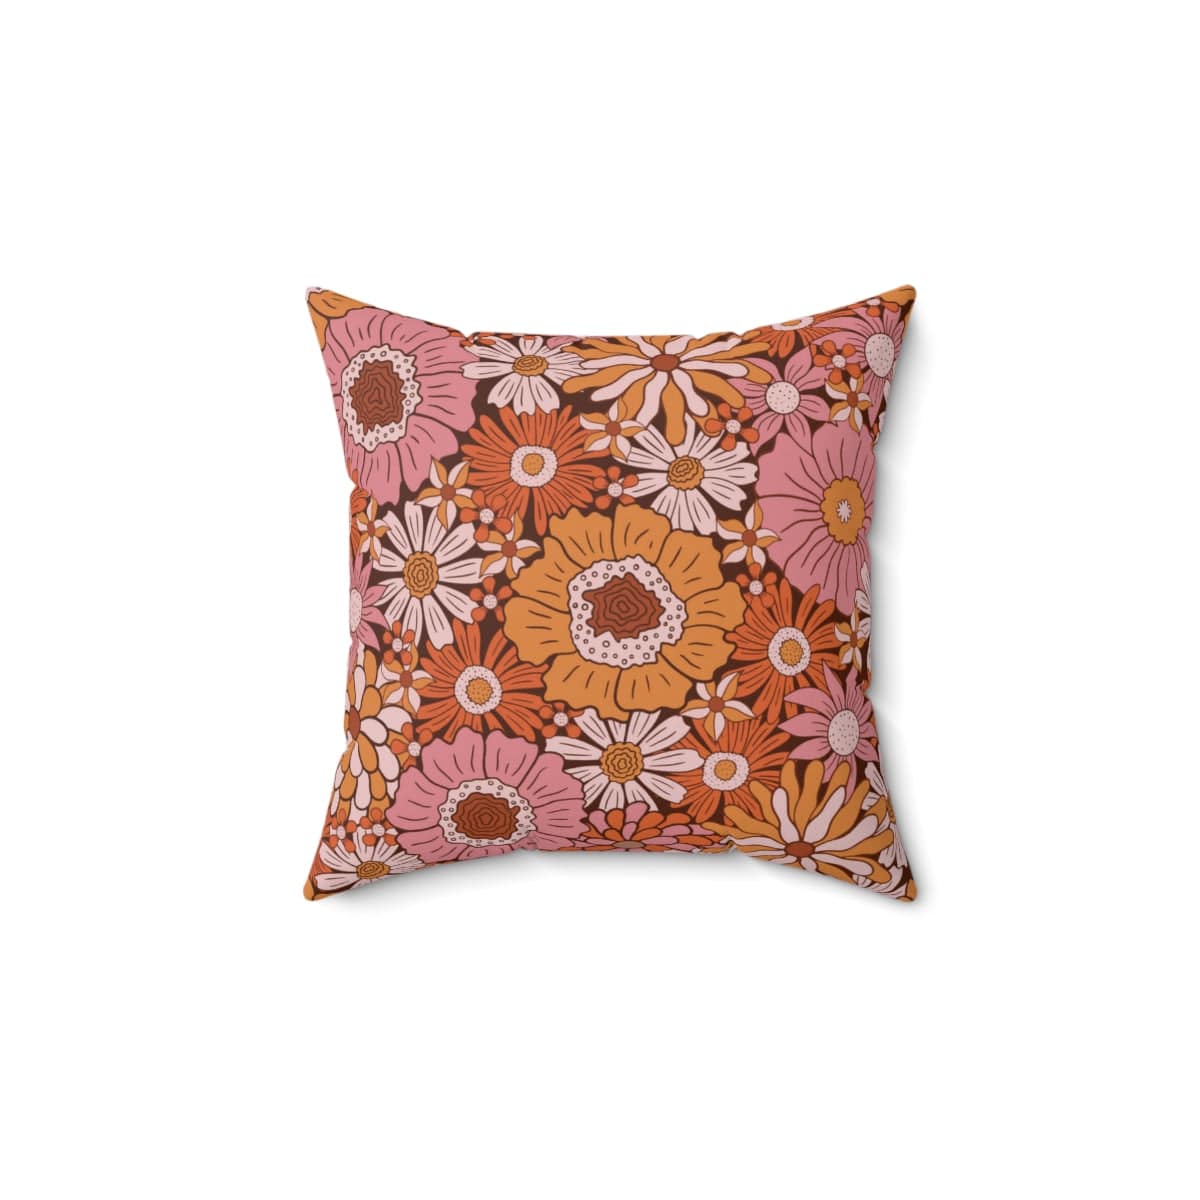 Kate McEnroe New York Mid Century Modern Groovy Floral Pillow Home Decor 14" × 14" 11674053198287552032